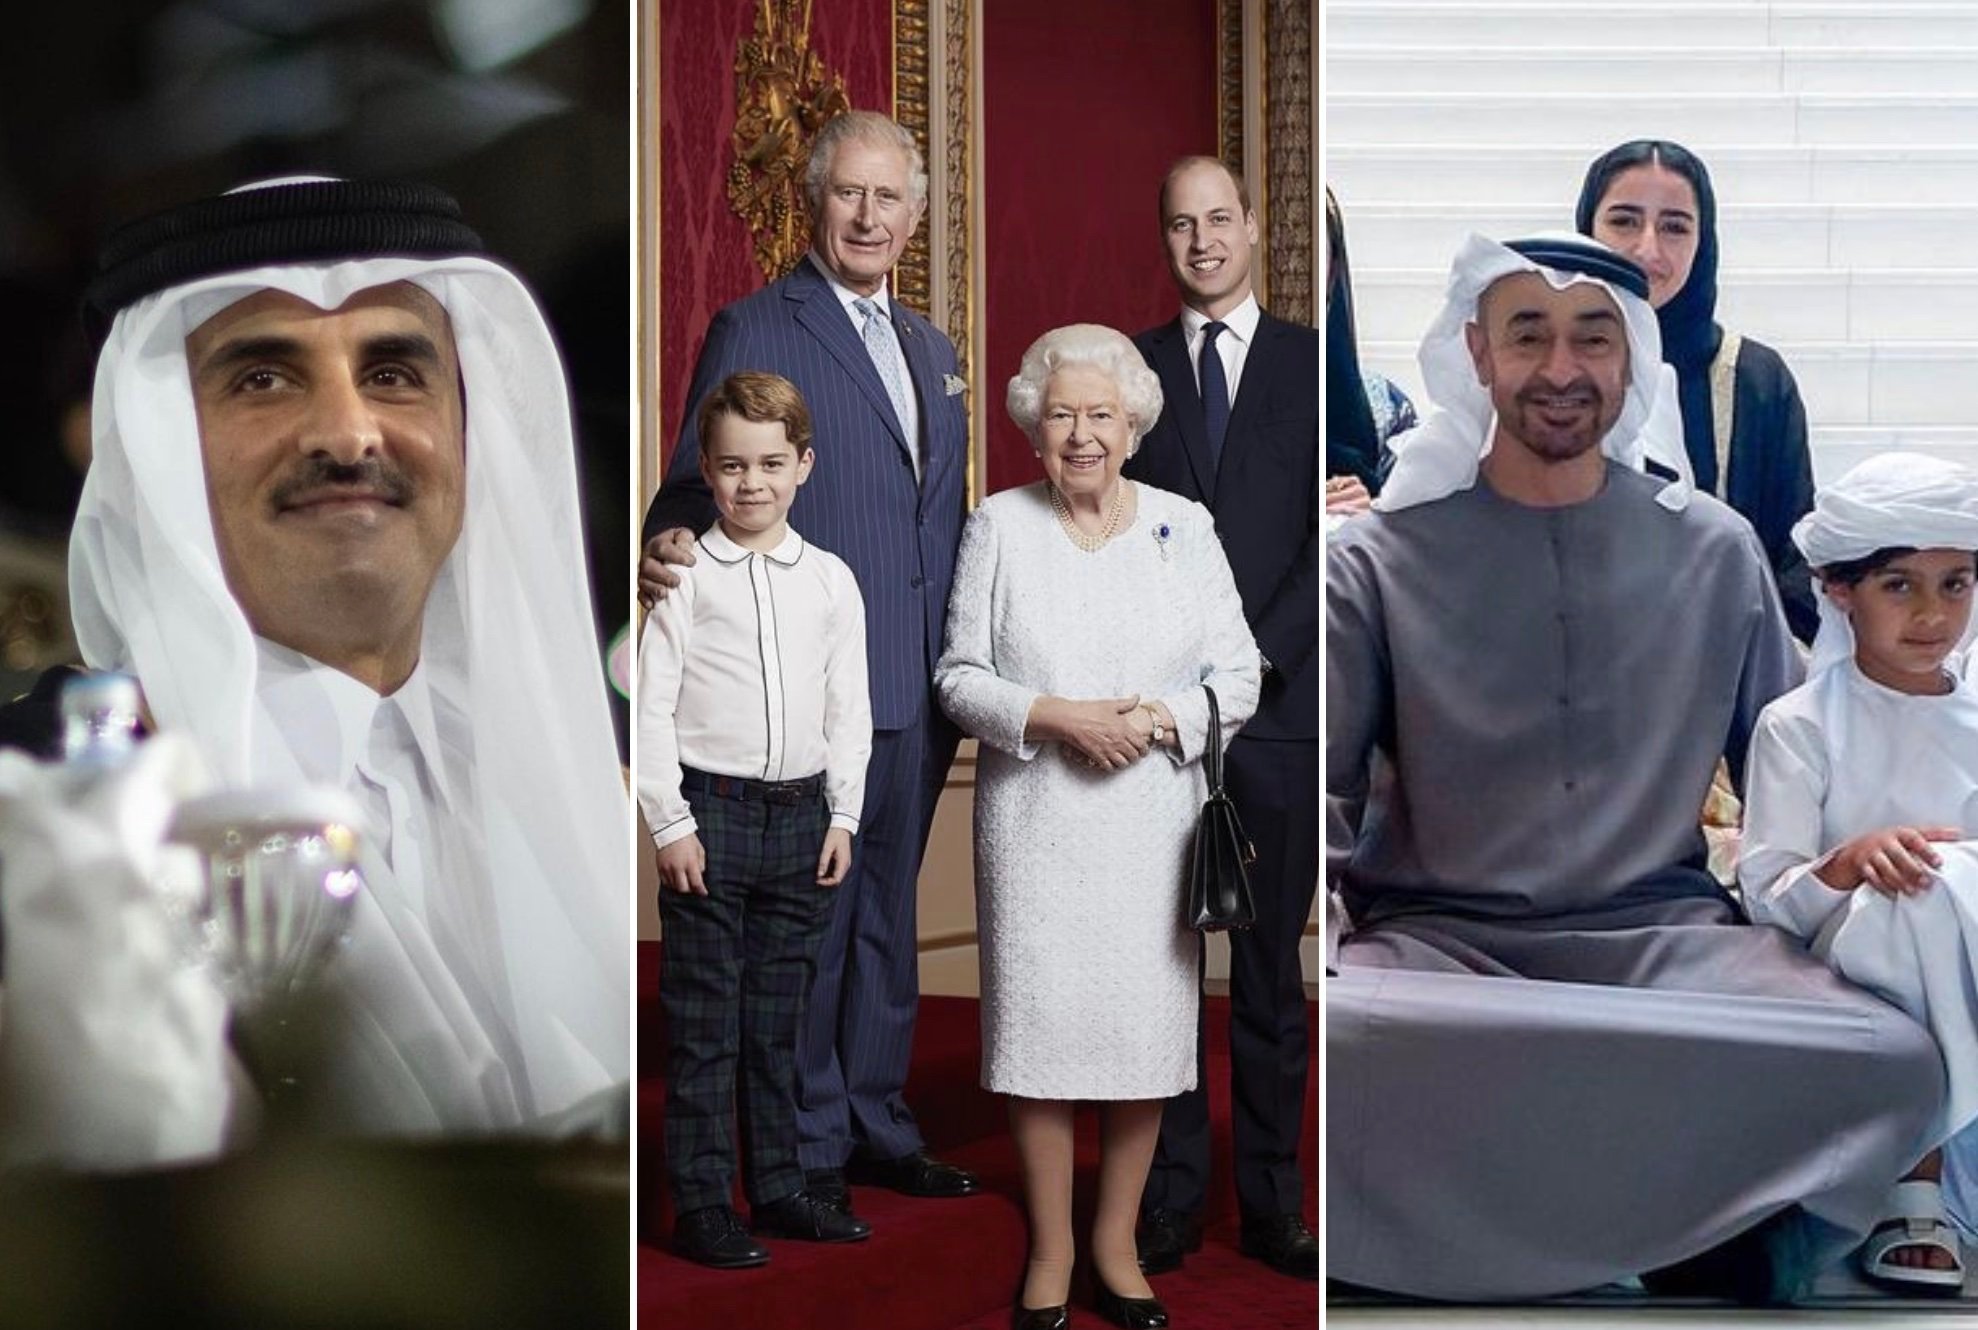 Qatar’s Sheikh Tamim bin Hamad Al Thani, Queen Elizabeth and the British royal family, and Abu Dhabi’s Sheikh Mohammed bin Zayed Al Nahyan and the UAE royal family. Photos: @tamim, @RoyalFamily, @mohamedbinzayed/Instagram